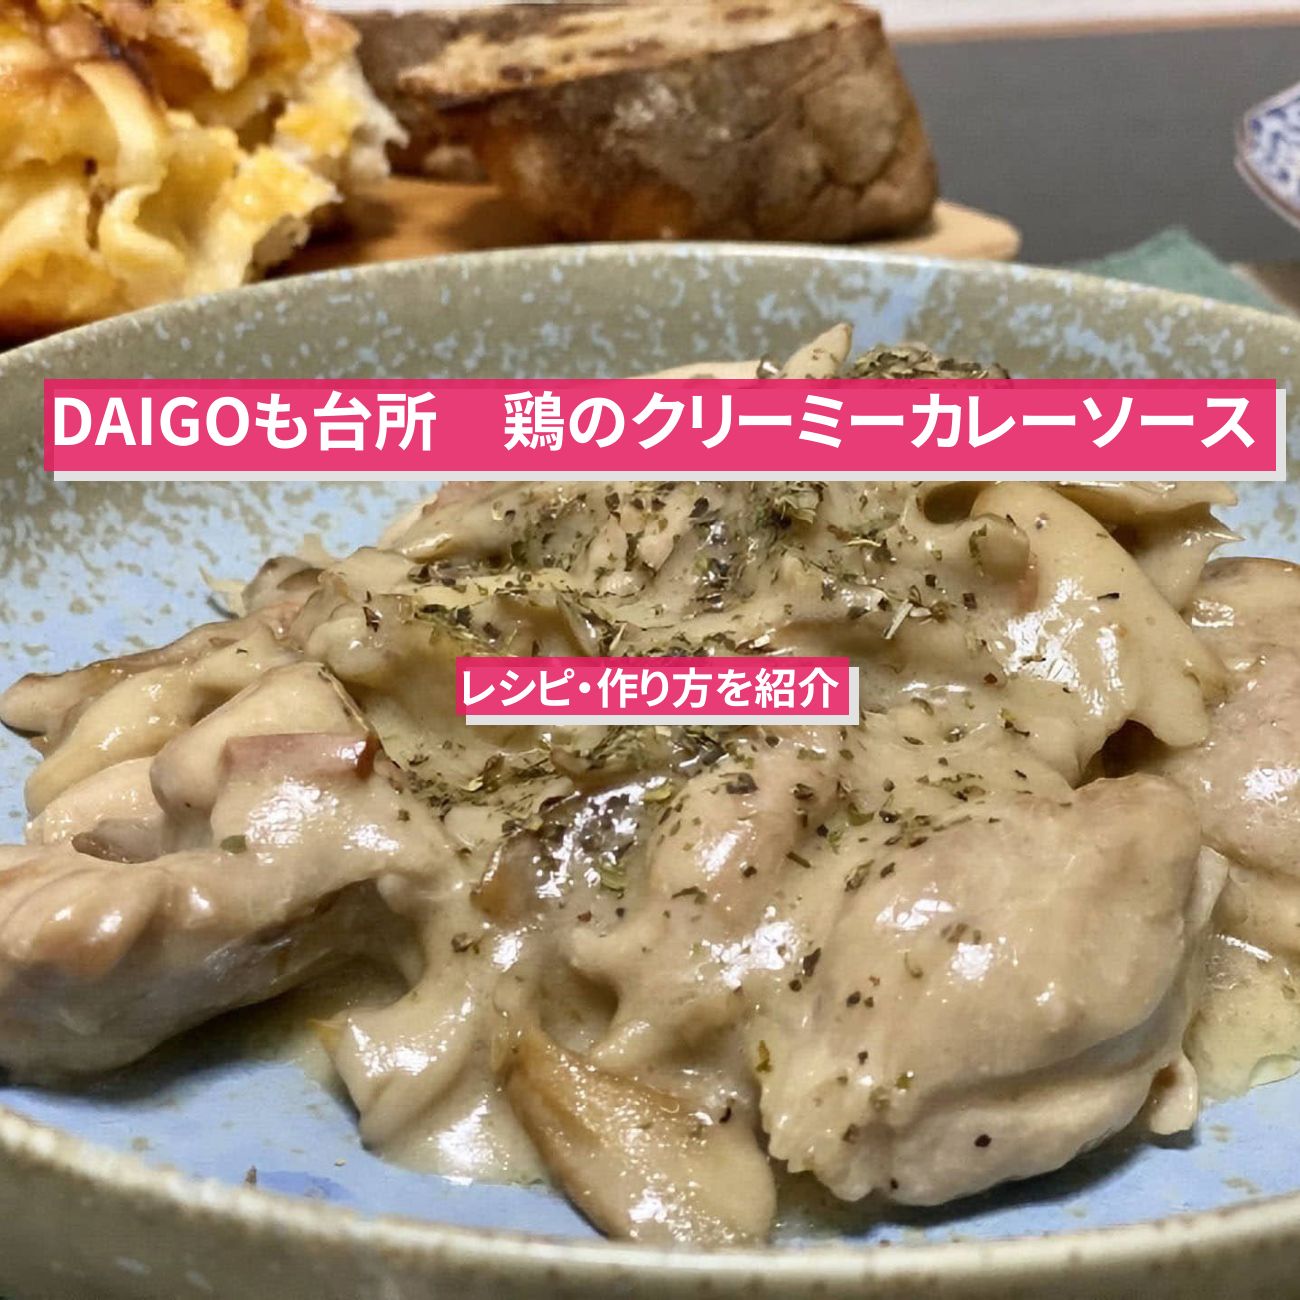 【DAIGOも台所】『鶏のクリーミーカレーソース』のレシピ・作り方を紹介〔ダイゴも台所〕